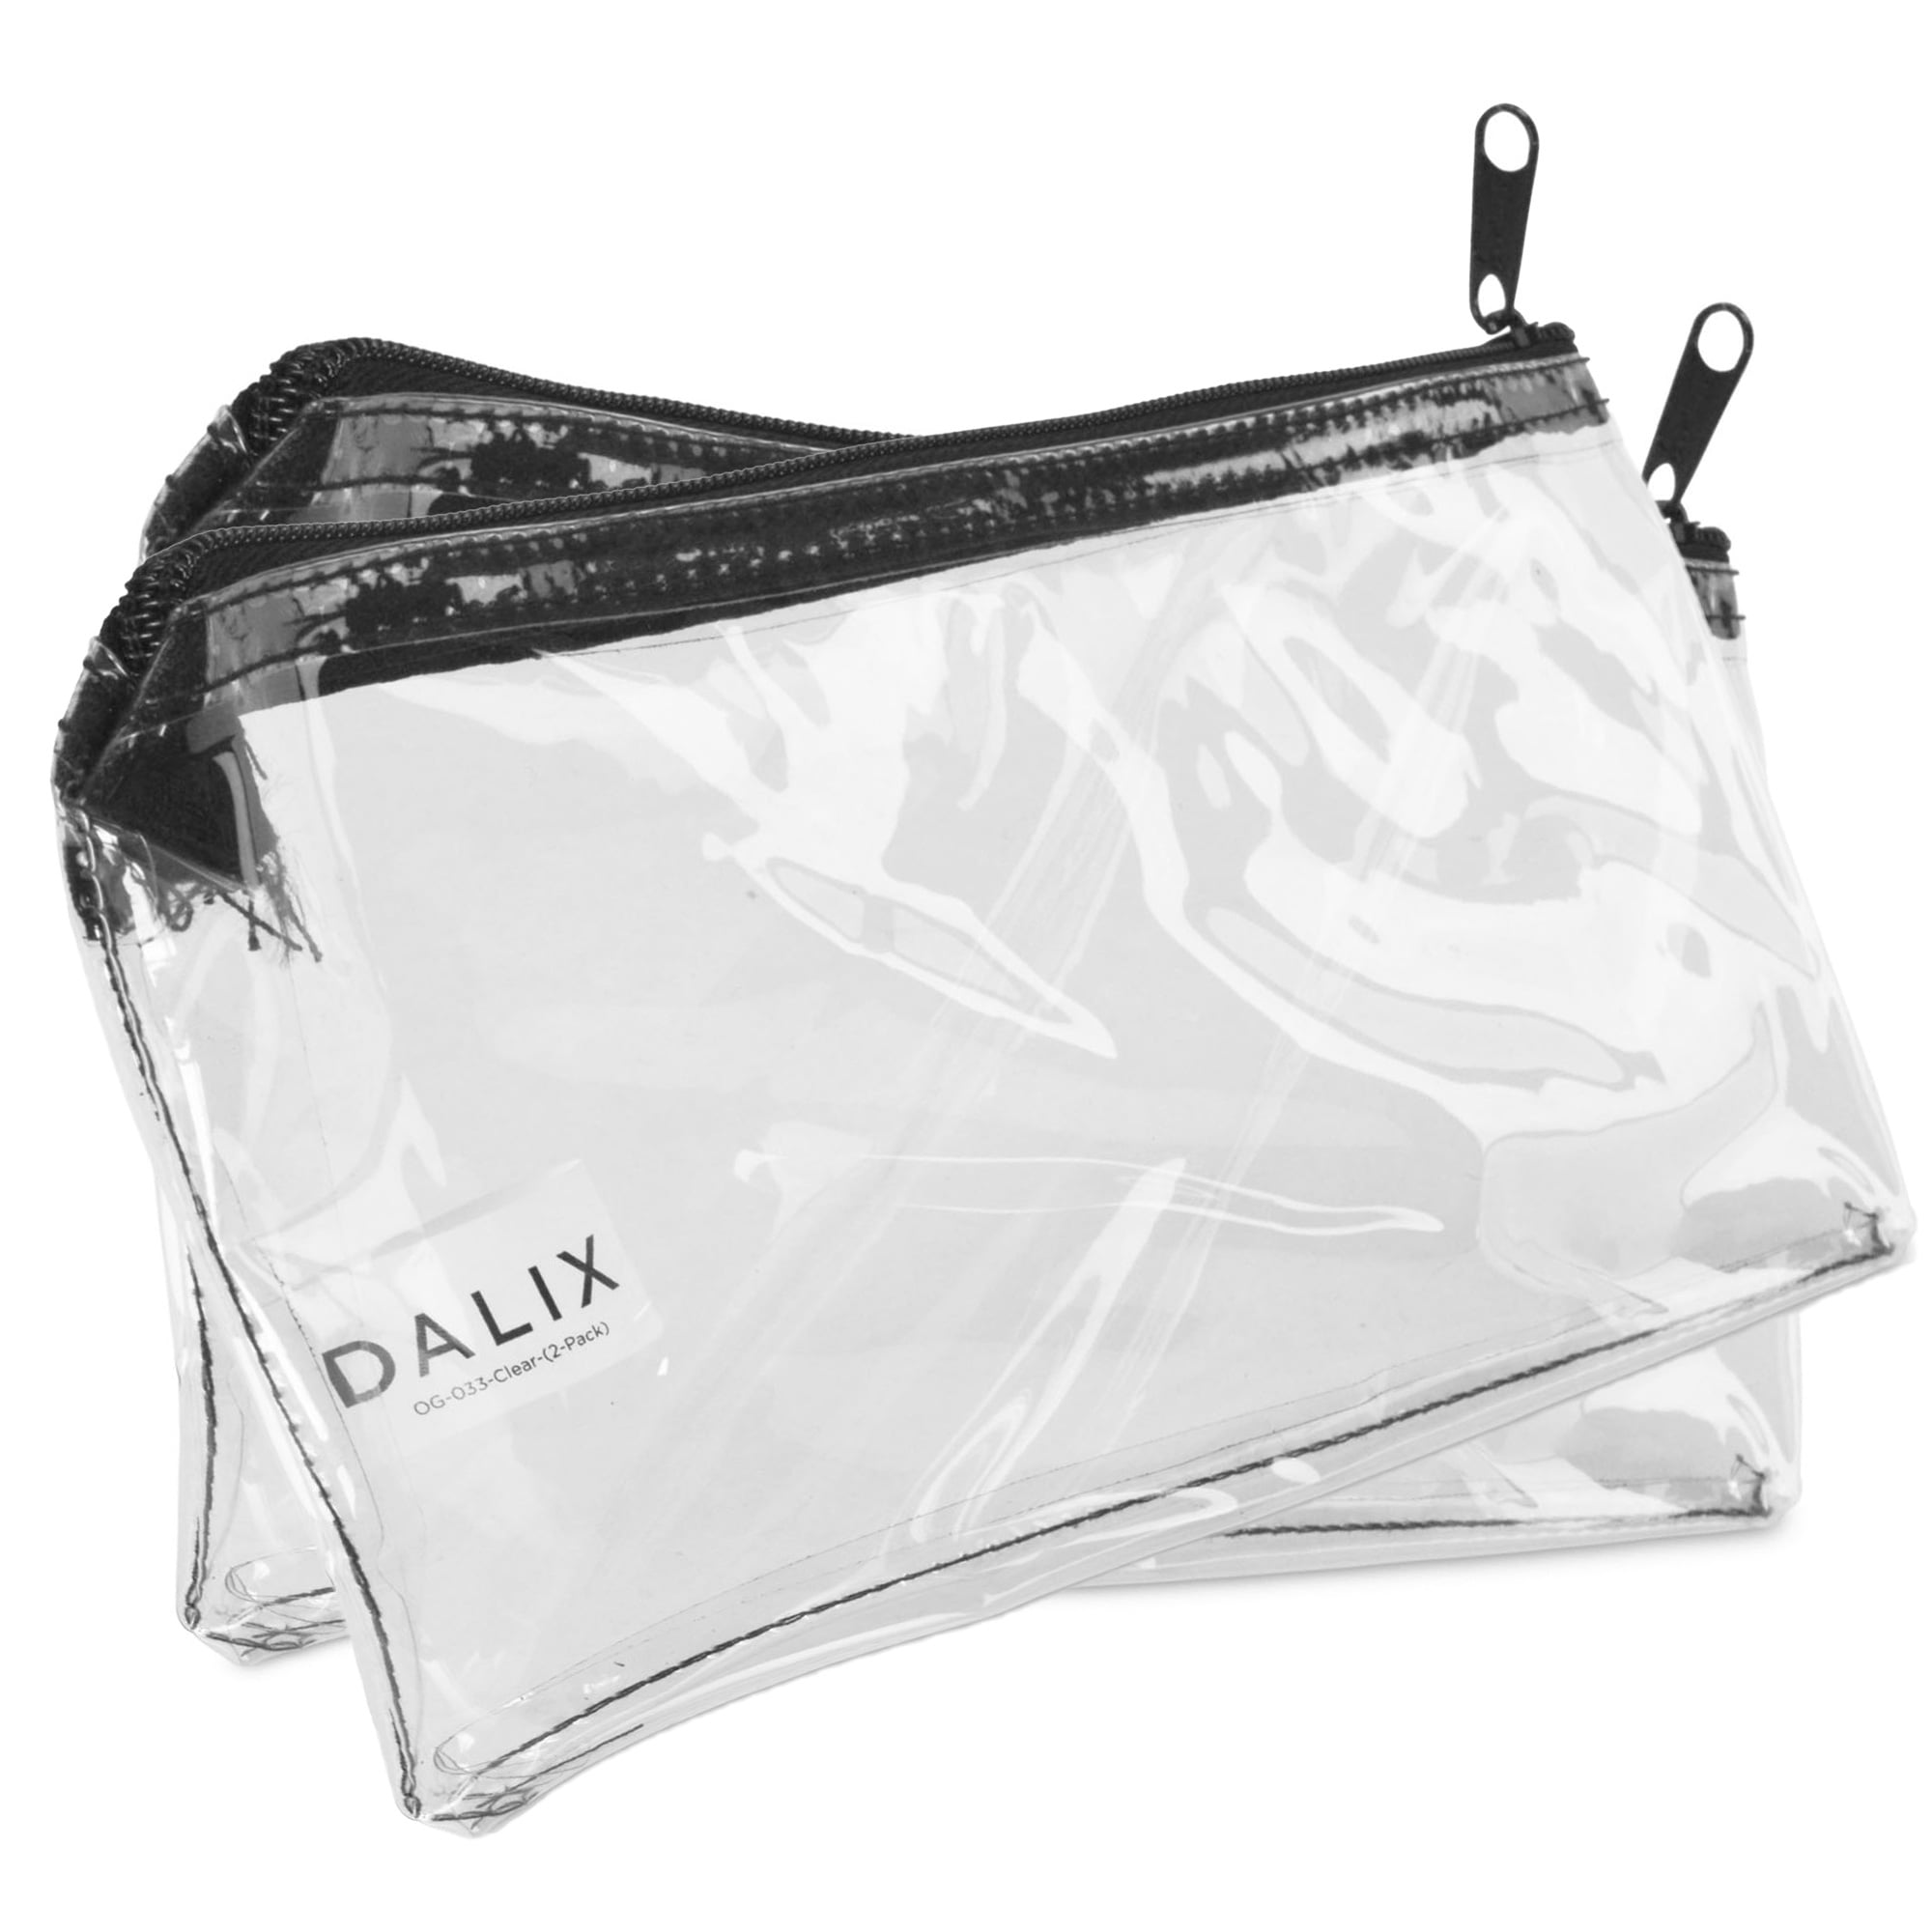 DALIX 2 PACK Zipper Makeup Bag Pencil Pouch Travel Accessories Holder Clear Transparent ...